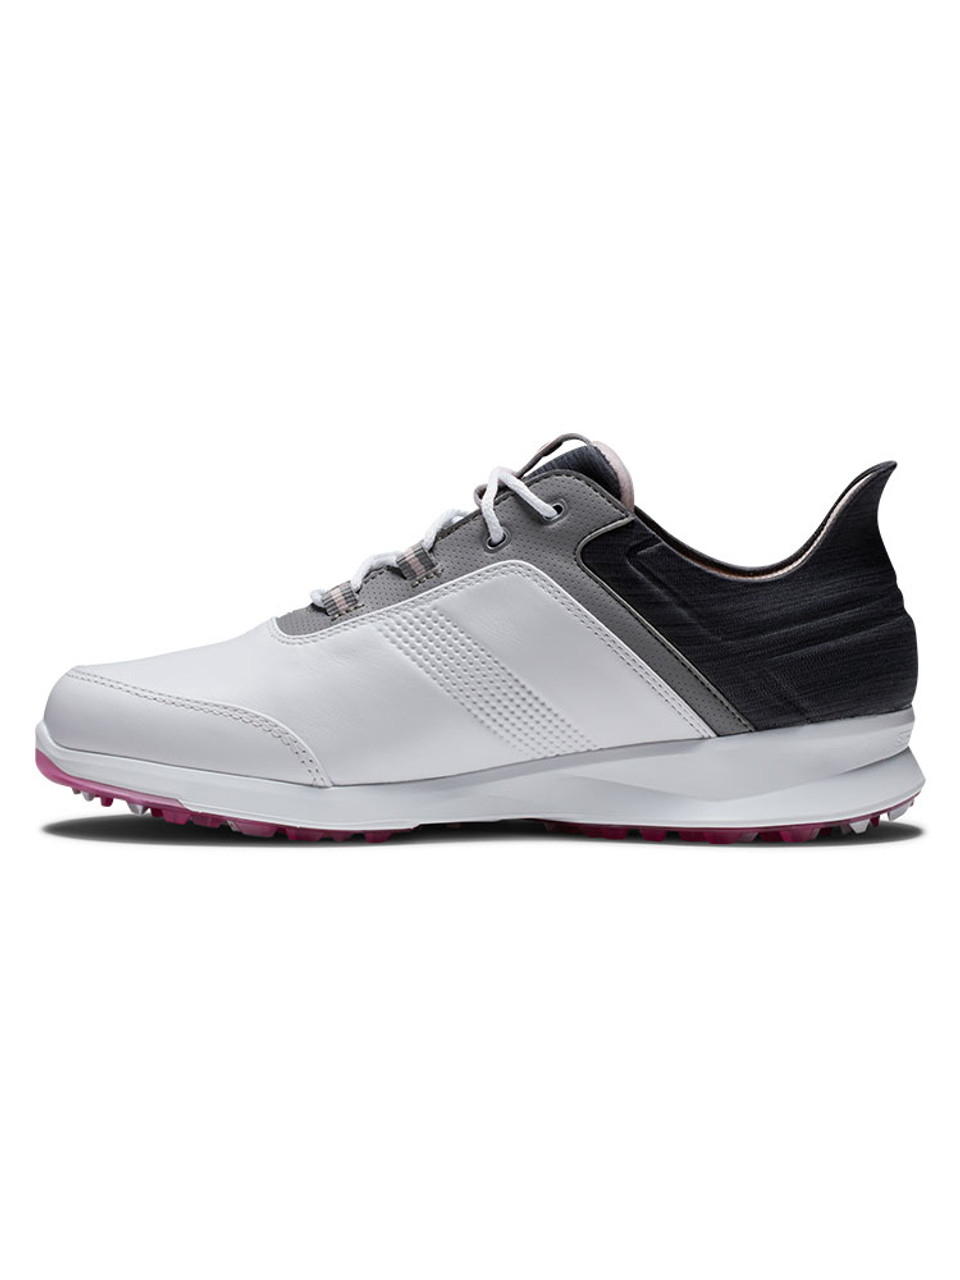 FootJoy Women's Stratos Golf Shoes - White/Black - Womens | GolfBox